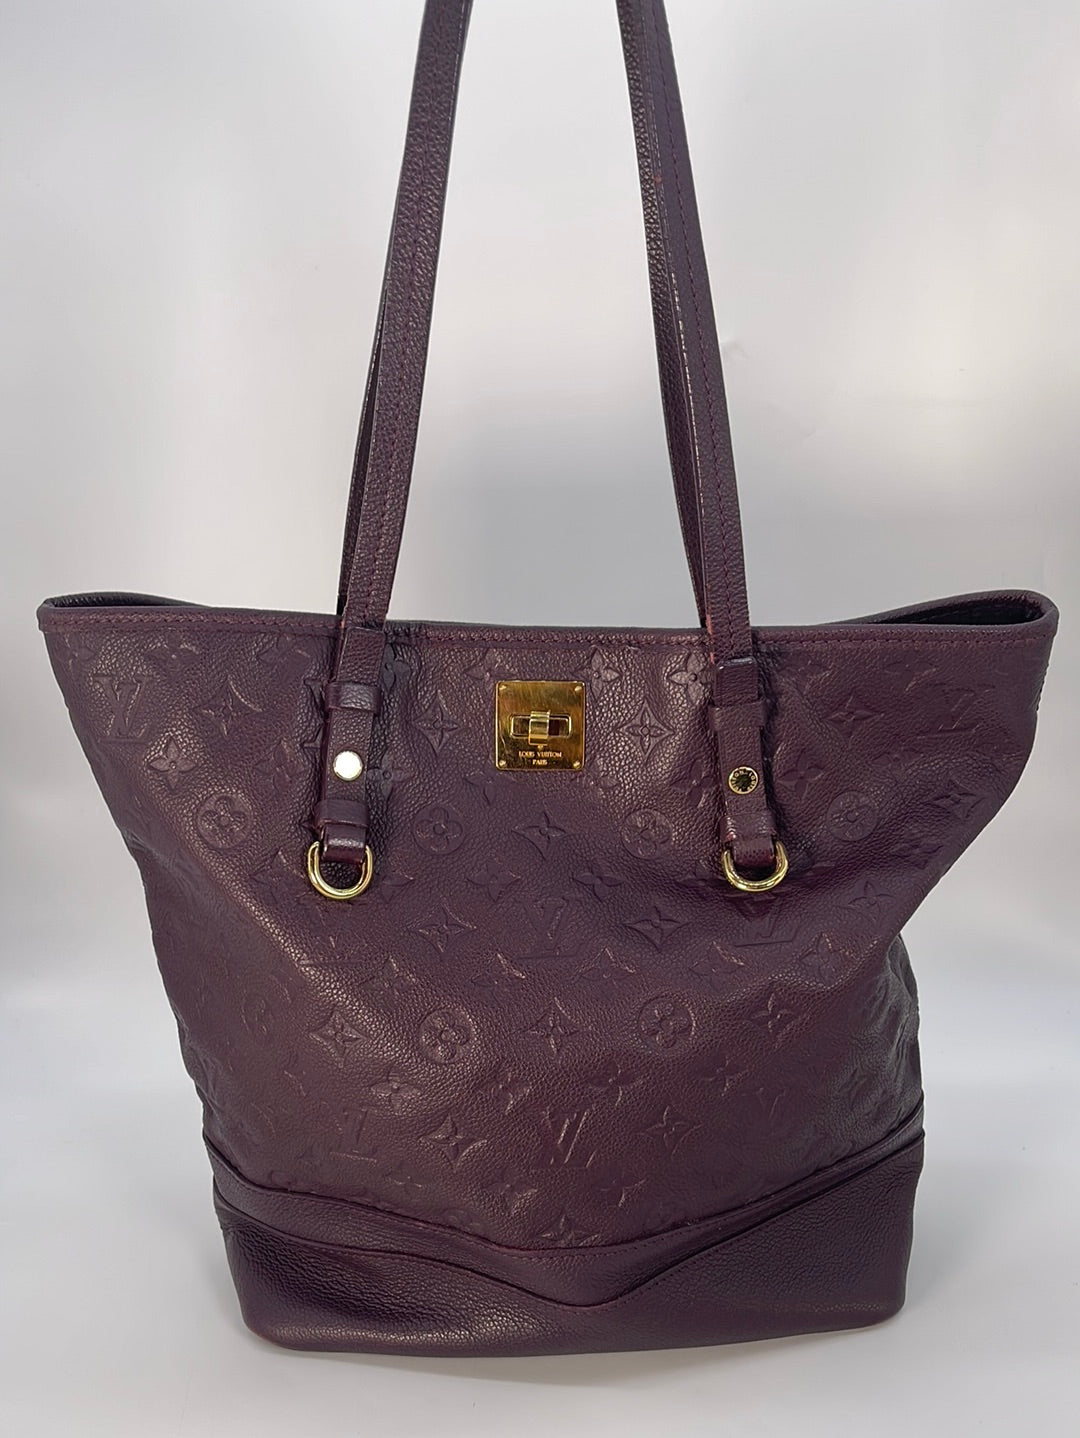 Louis Vuitton Citadines Shopping Bag